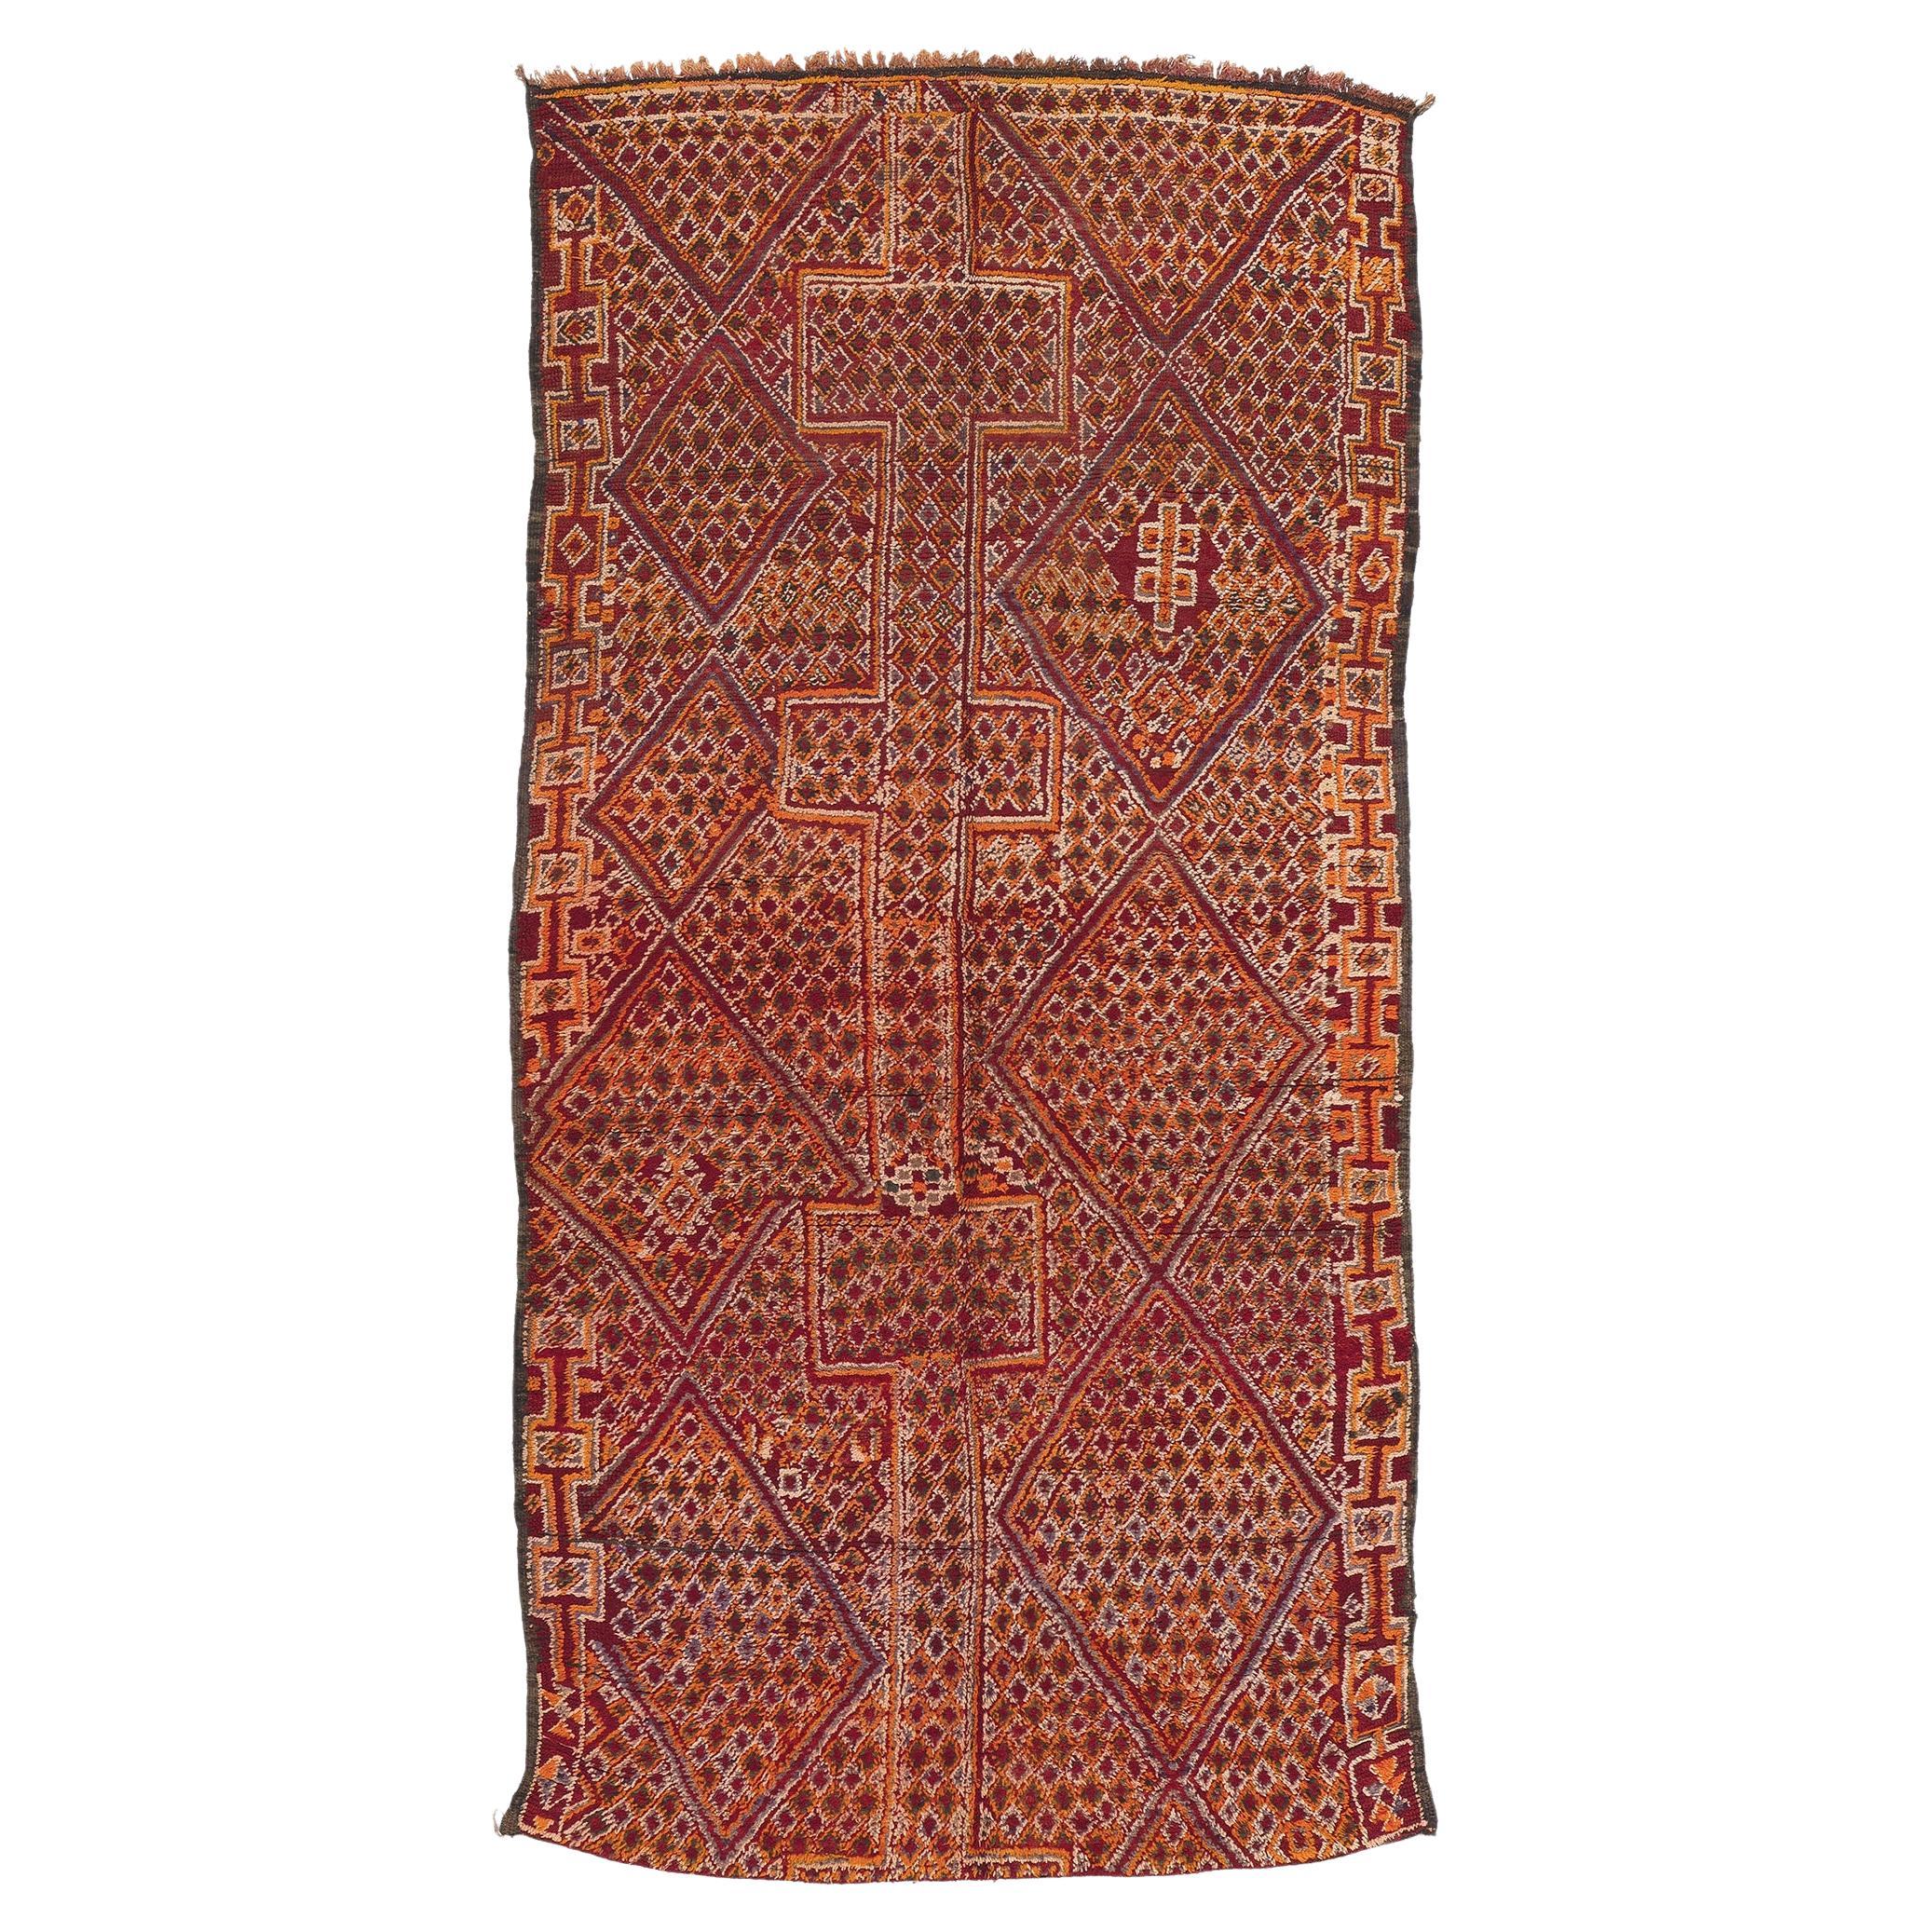 Vintage Beni MGuild Moroccan Rug, Irresistibly Chic Meets Sophisticated Boho